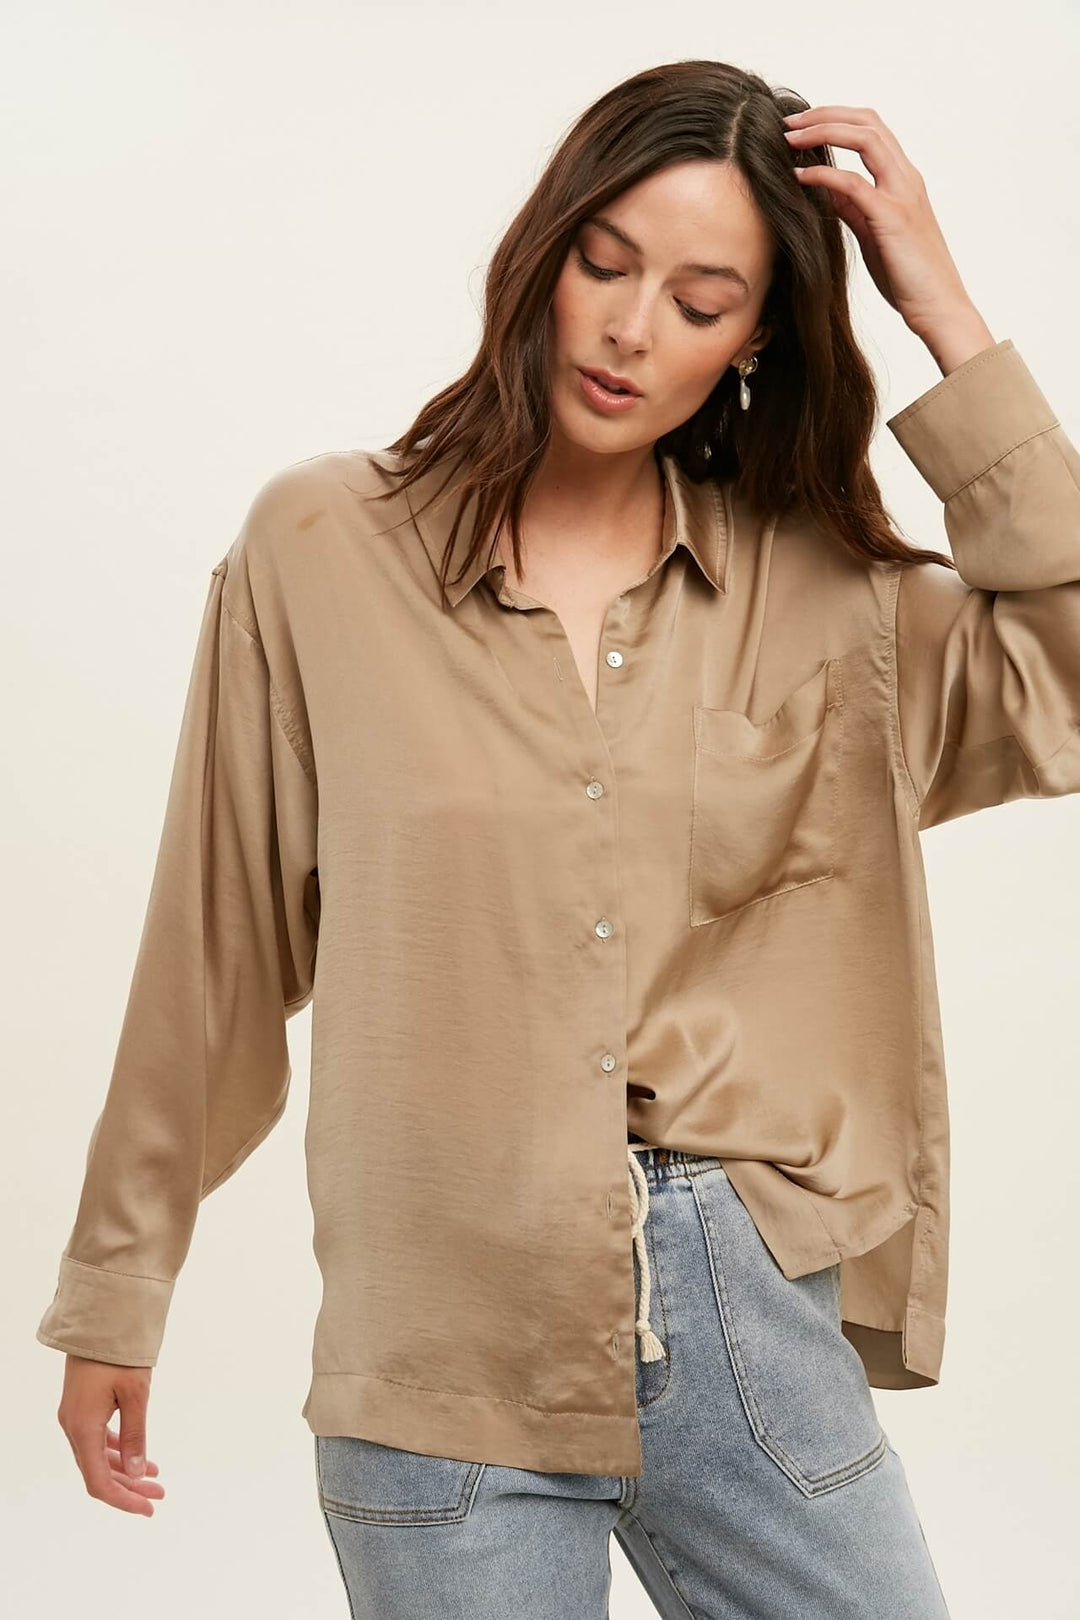 Mocha Satin Button Up Blouse - Shirts & Tops